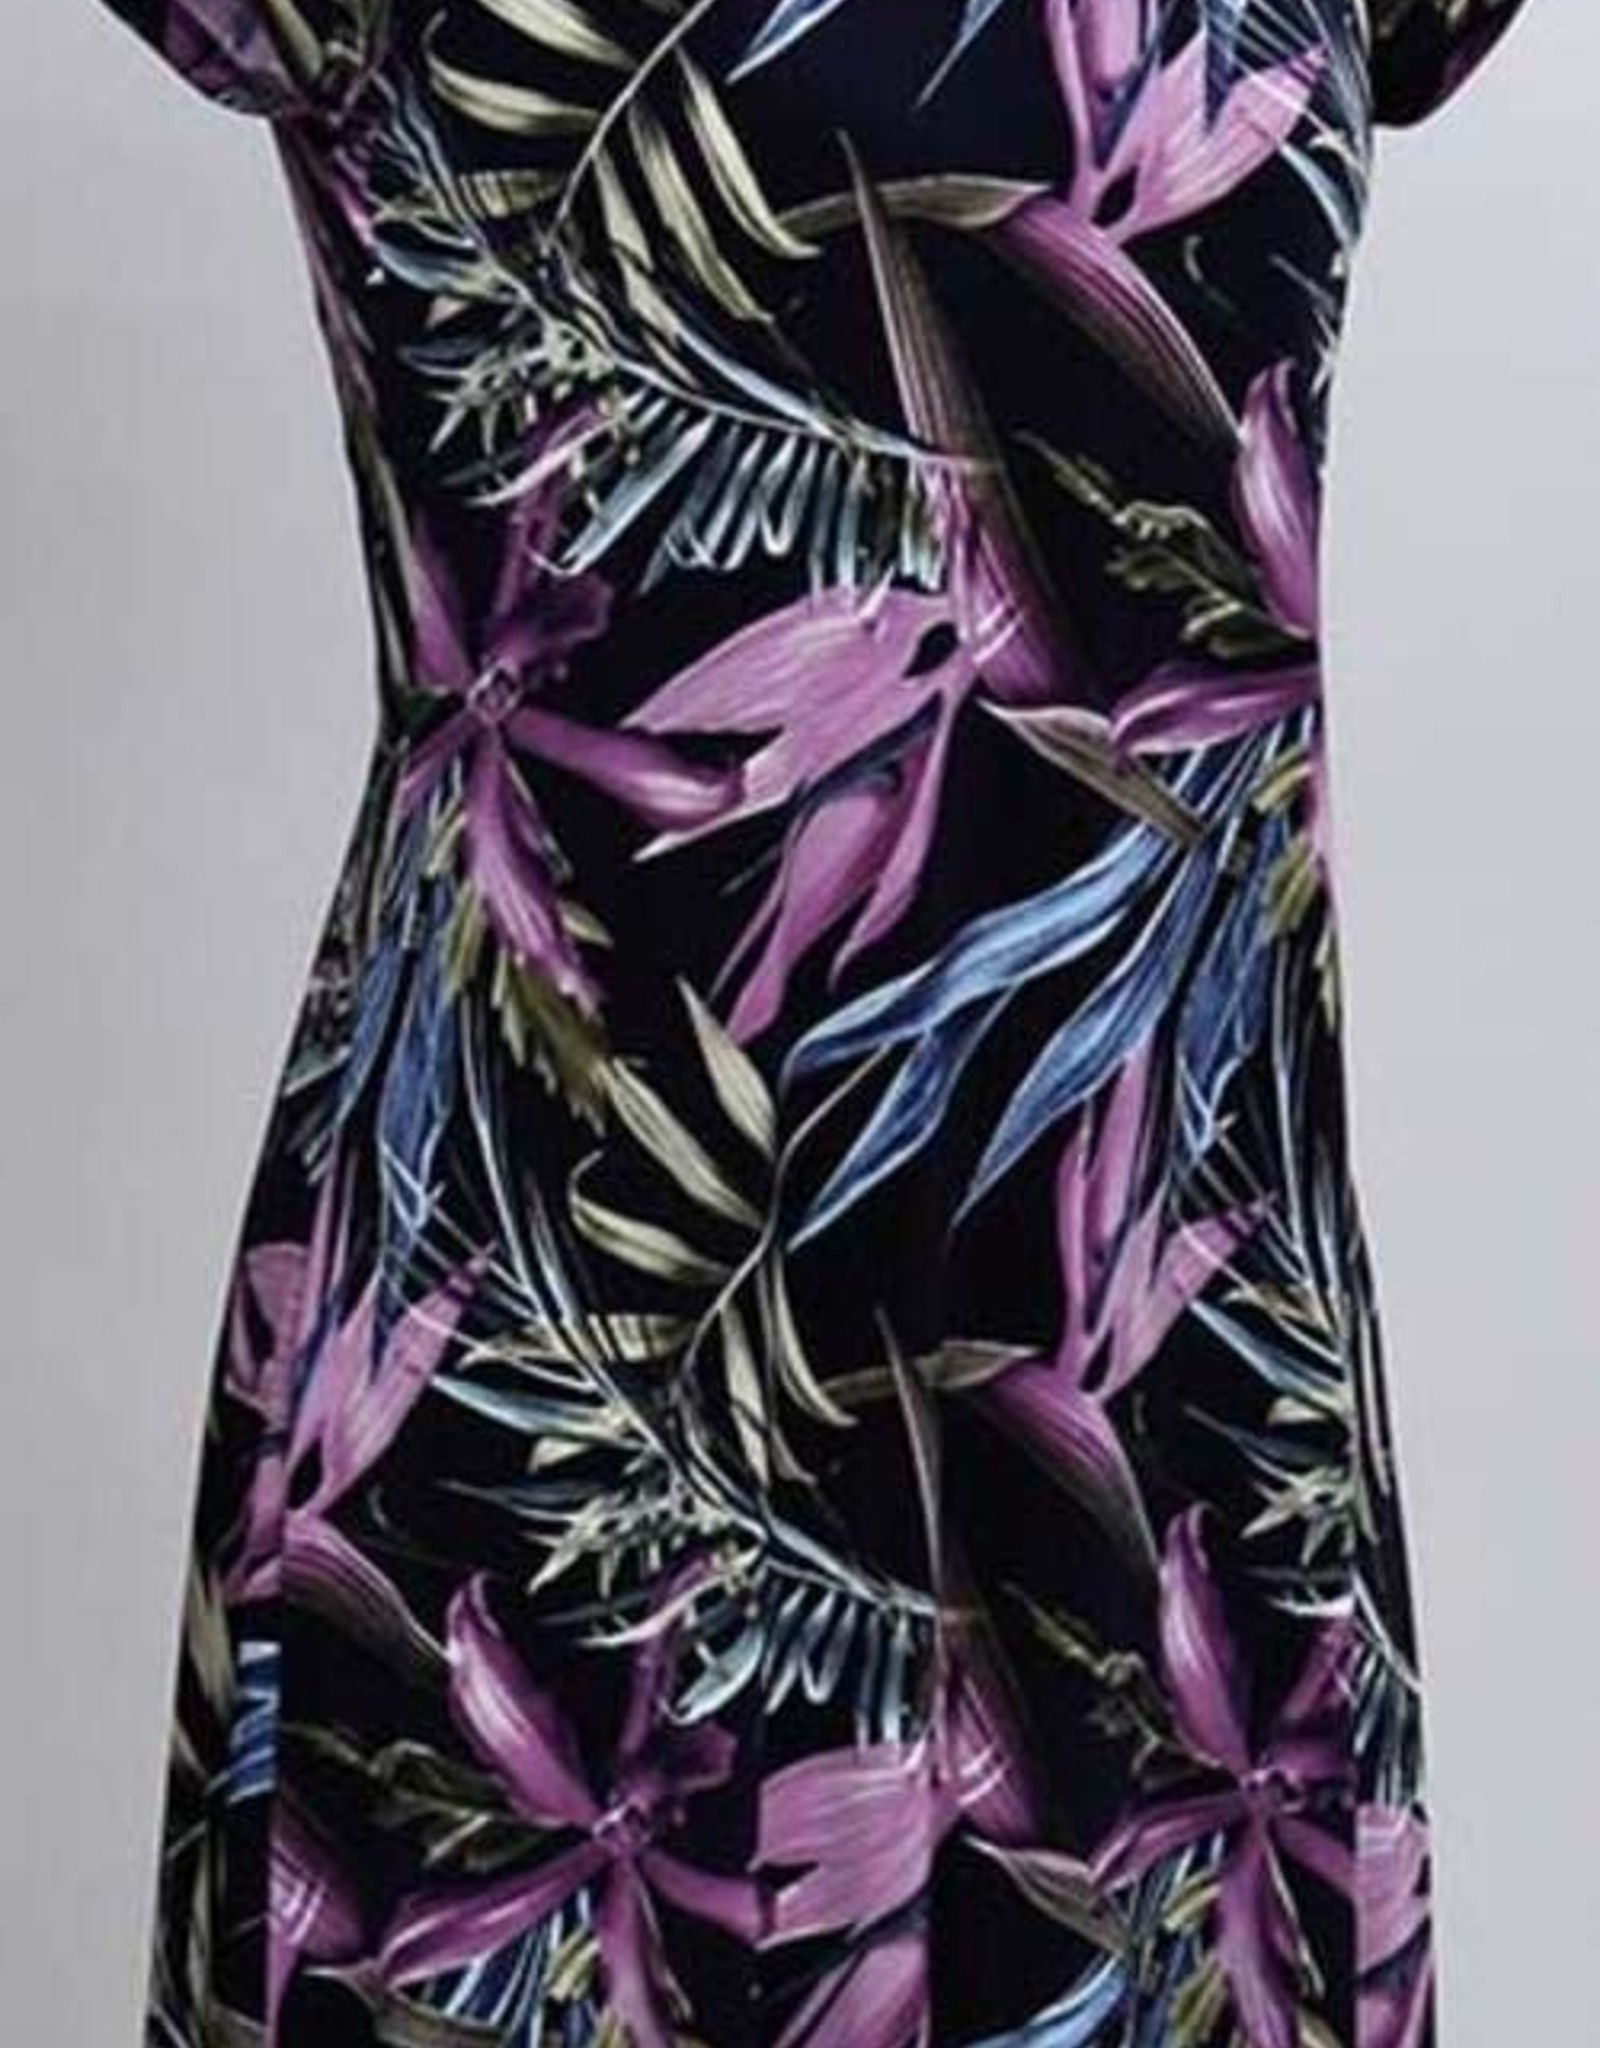 - Purple/Blue/Black Leaf Print Short Sleeve Dress